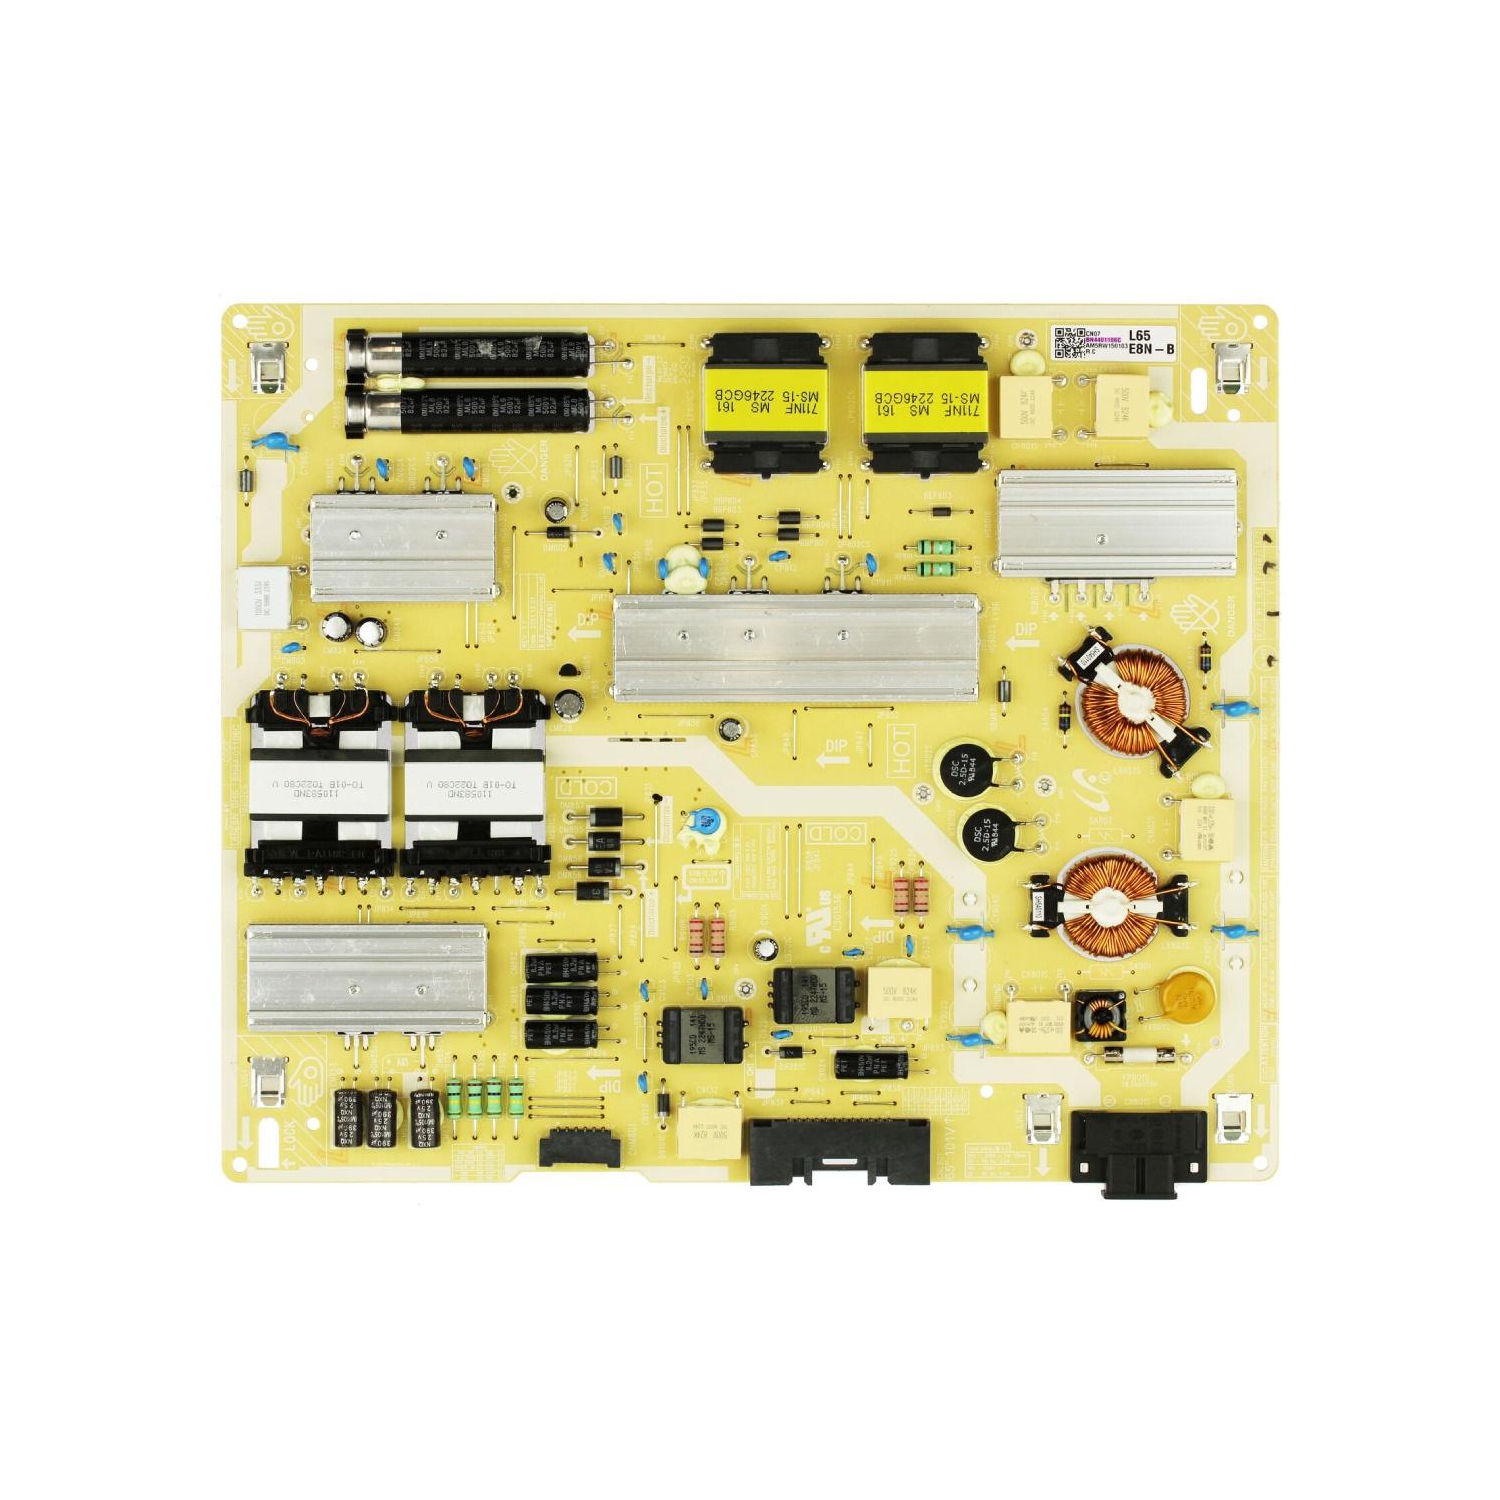 Refurbished (Good) Samsung BN44-01106C Power Supply / LED Board